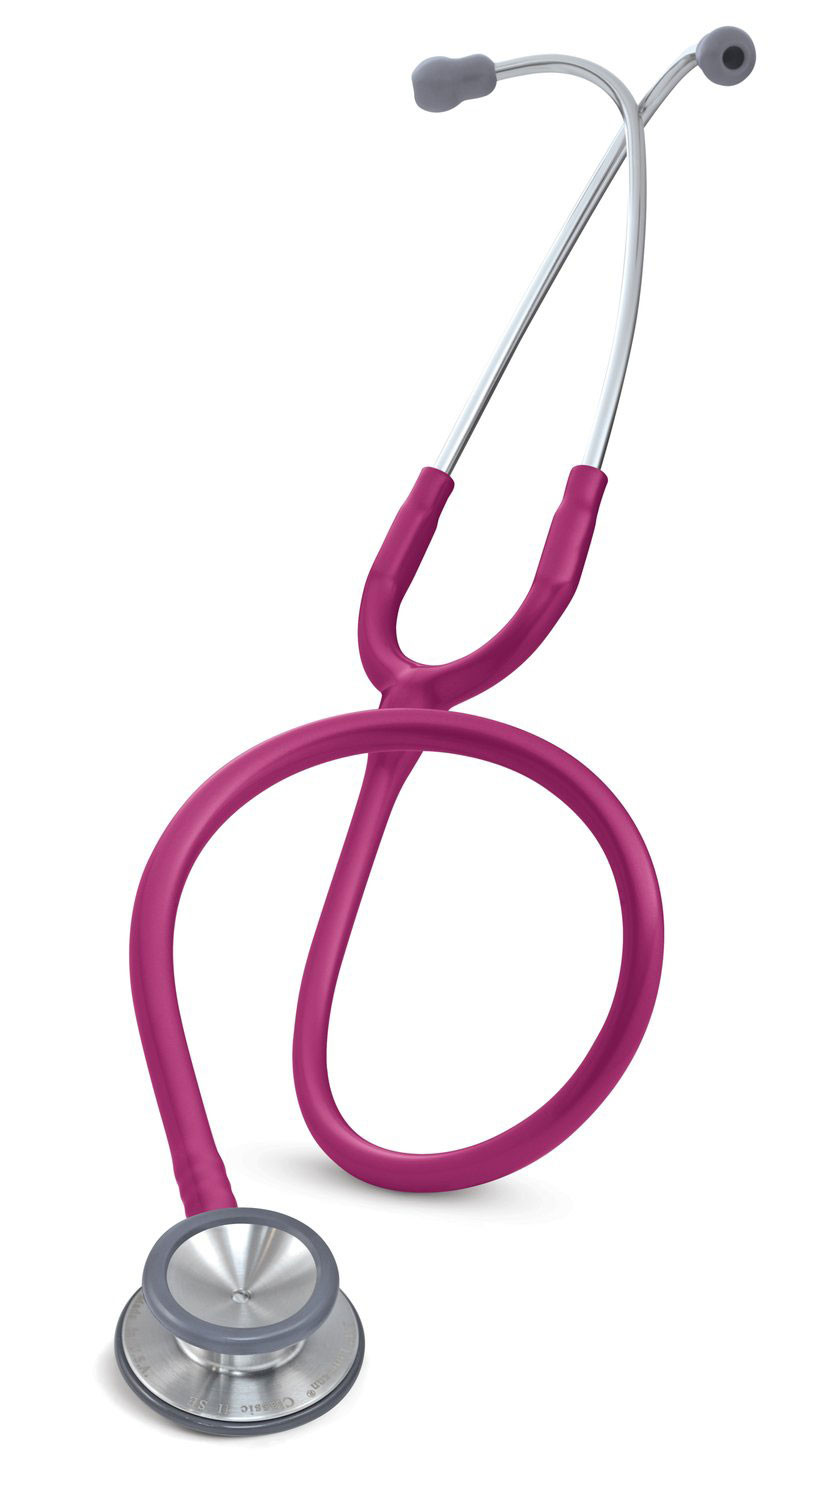 Purple stethoscope clipart.